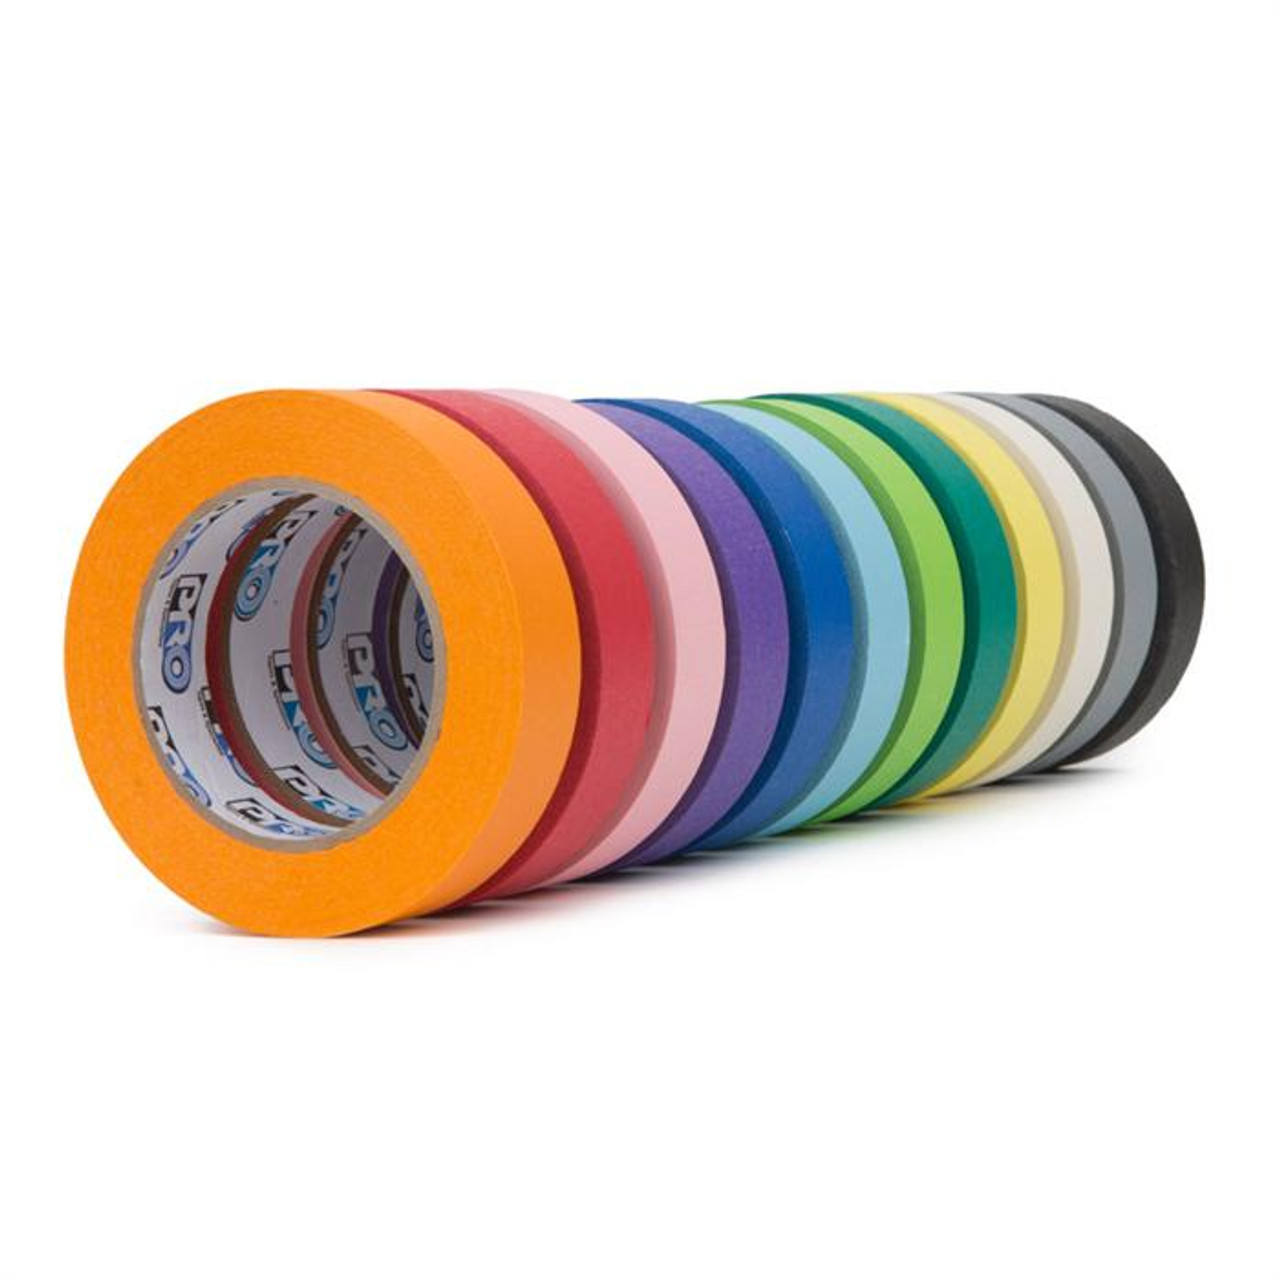 Profiklebeband - Crepe tape for paint masking, 60°C, 30mm x 50m